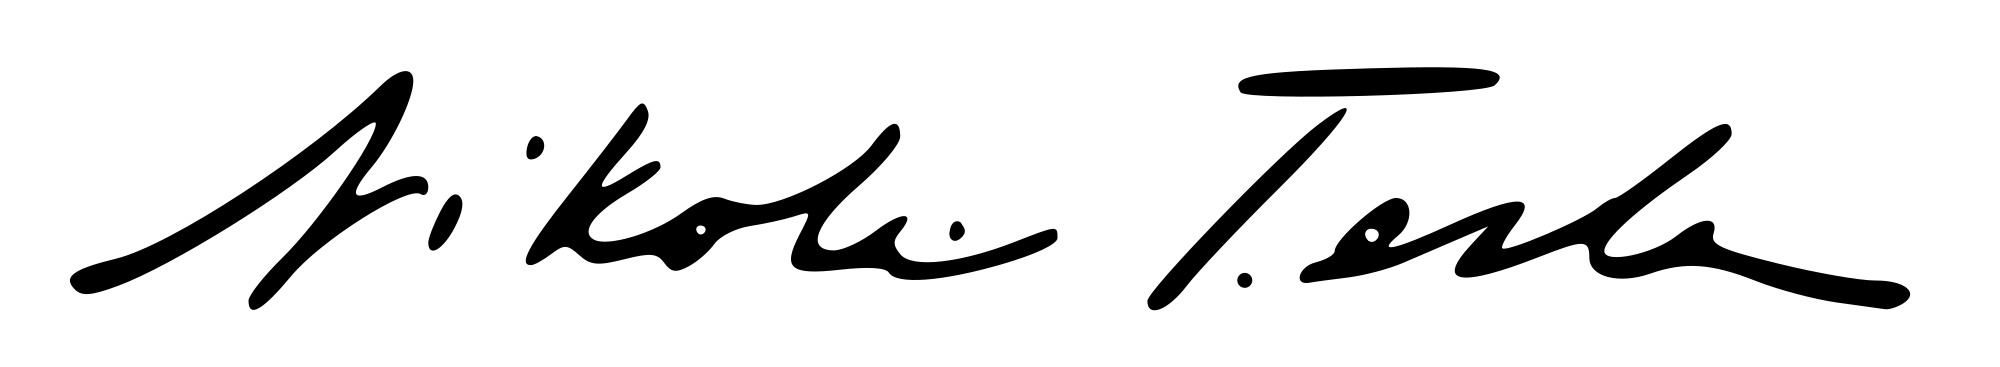 Nikola Tesla Signature icons